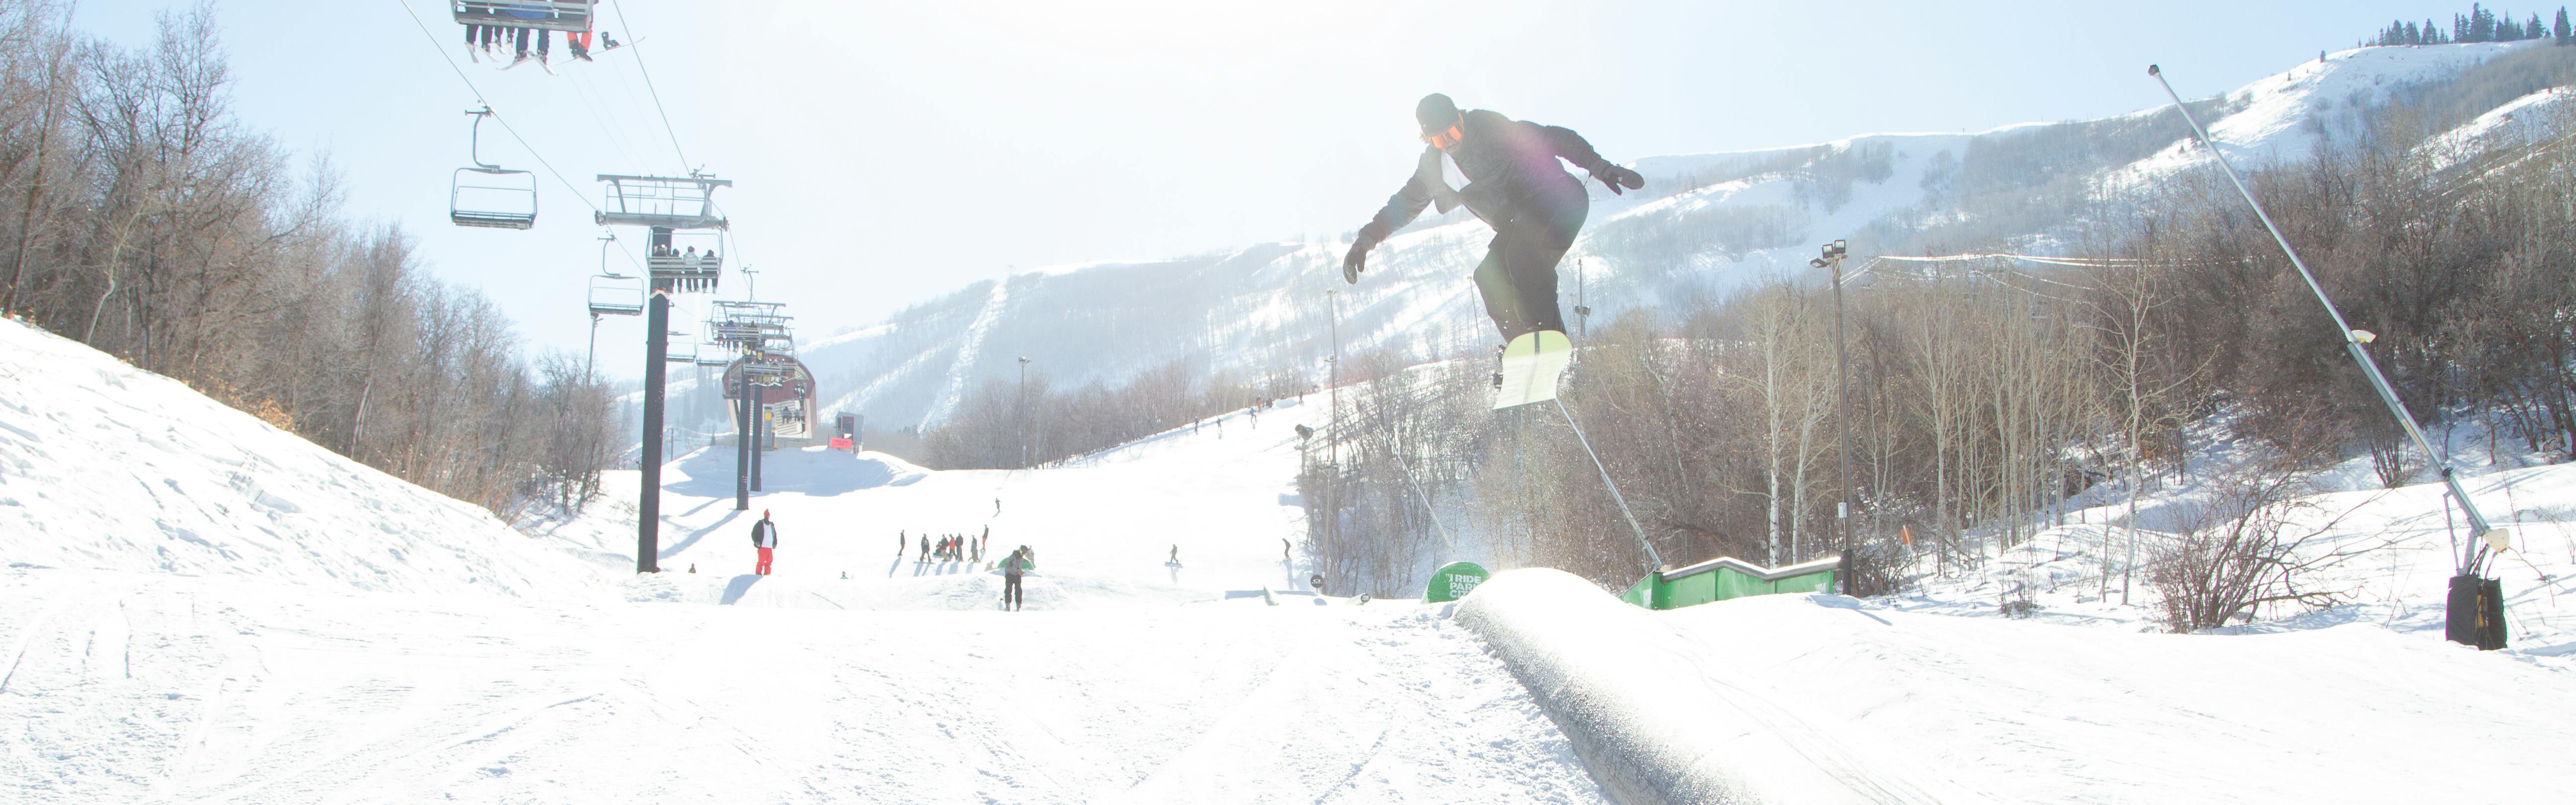 A snowboarder jumps above a rail. 